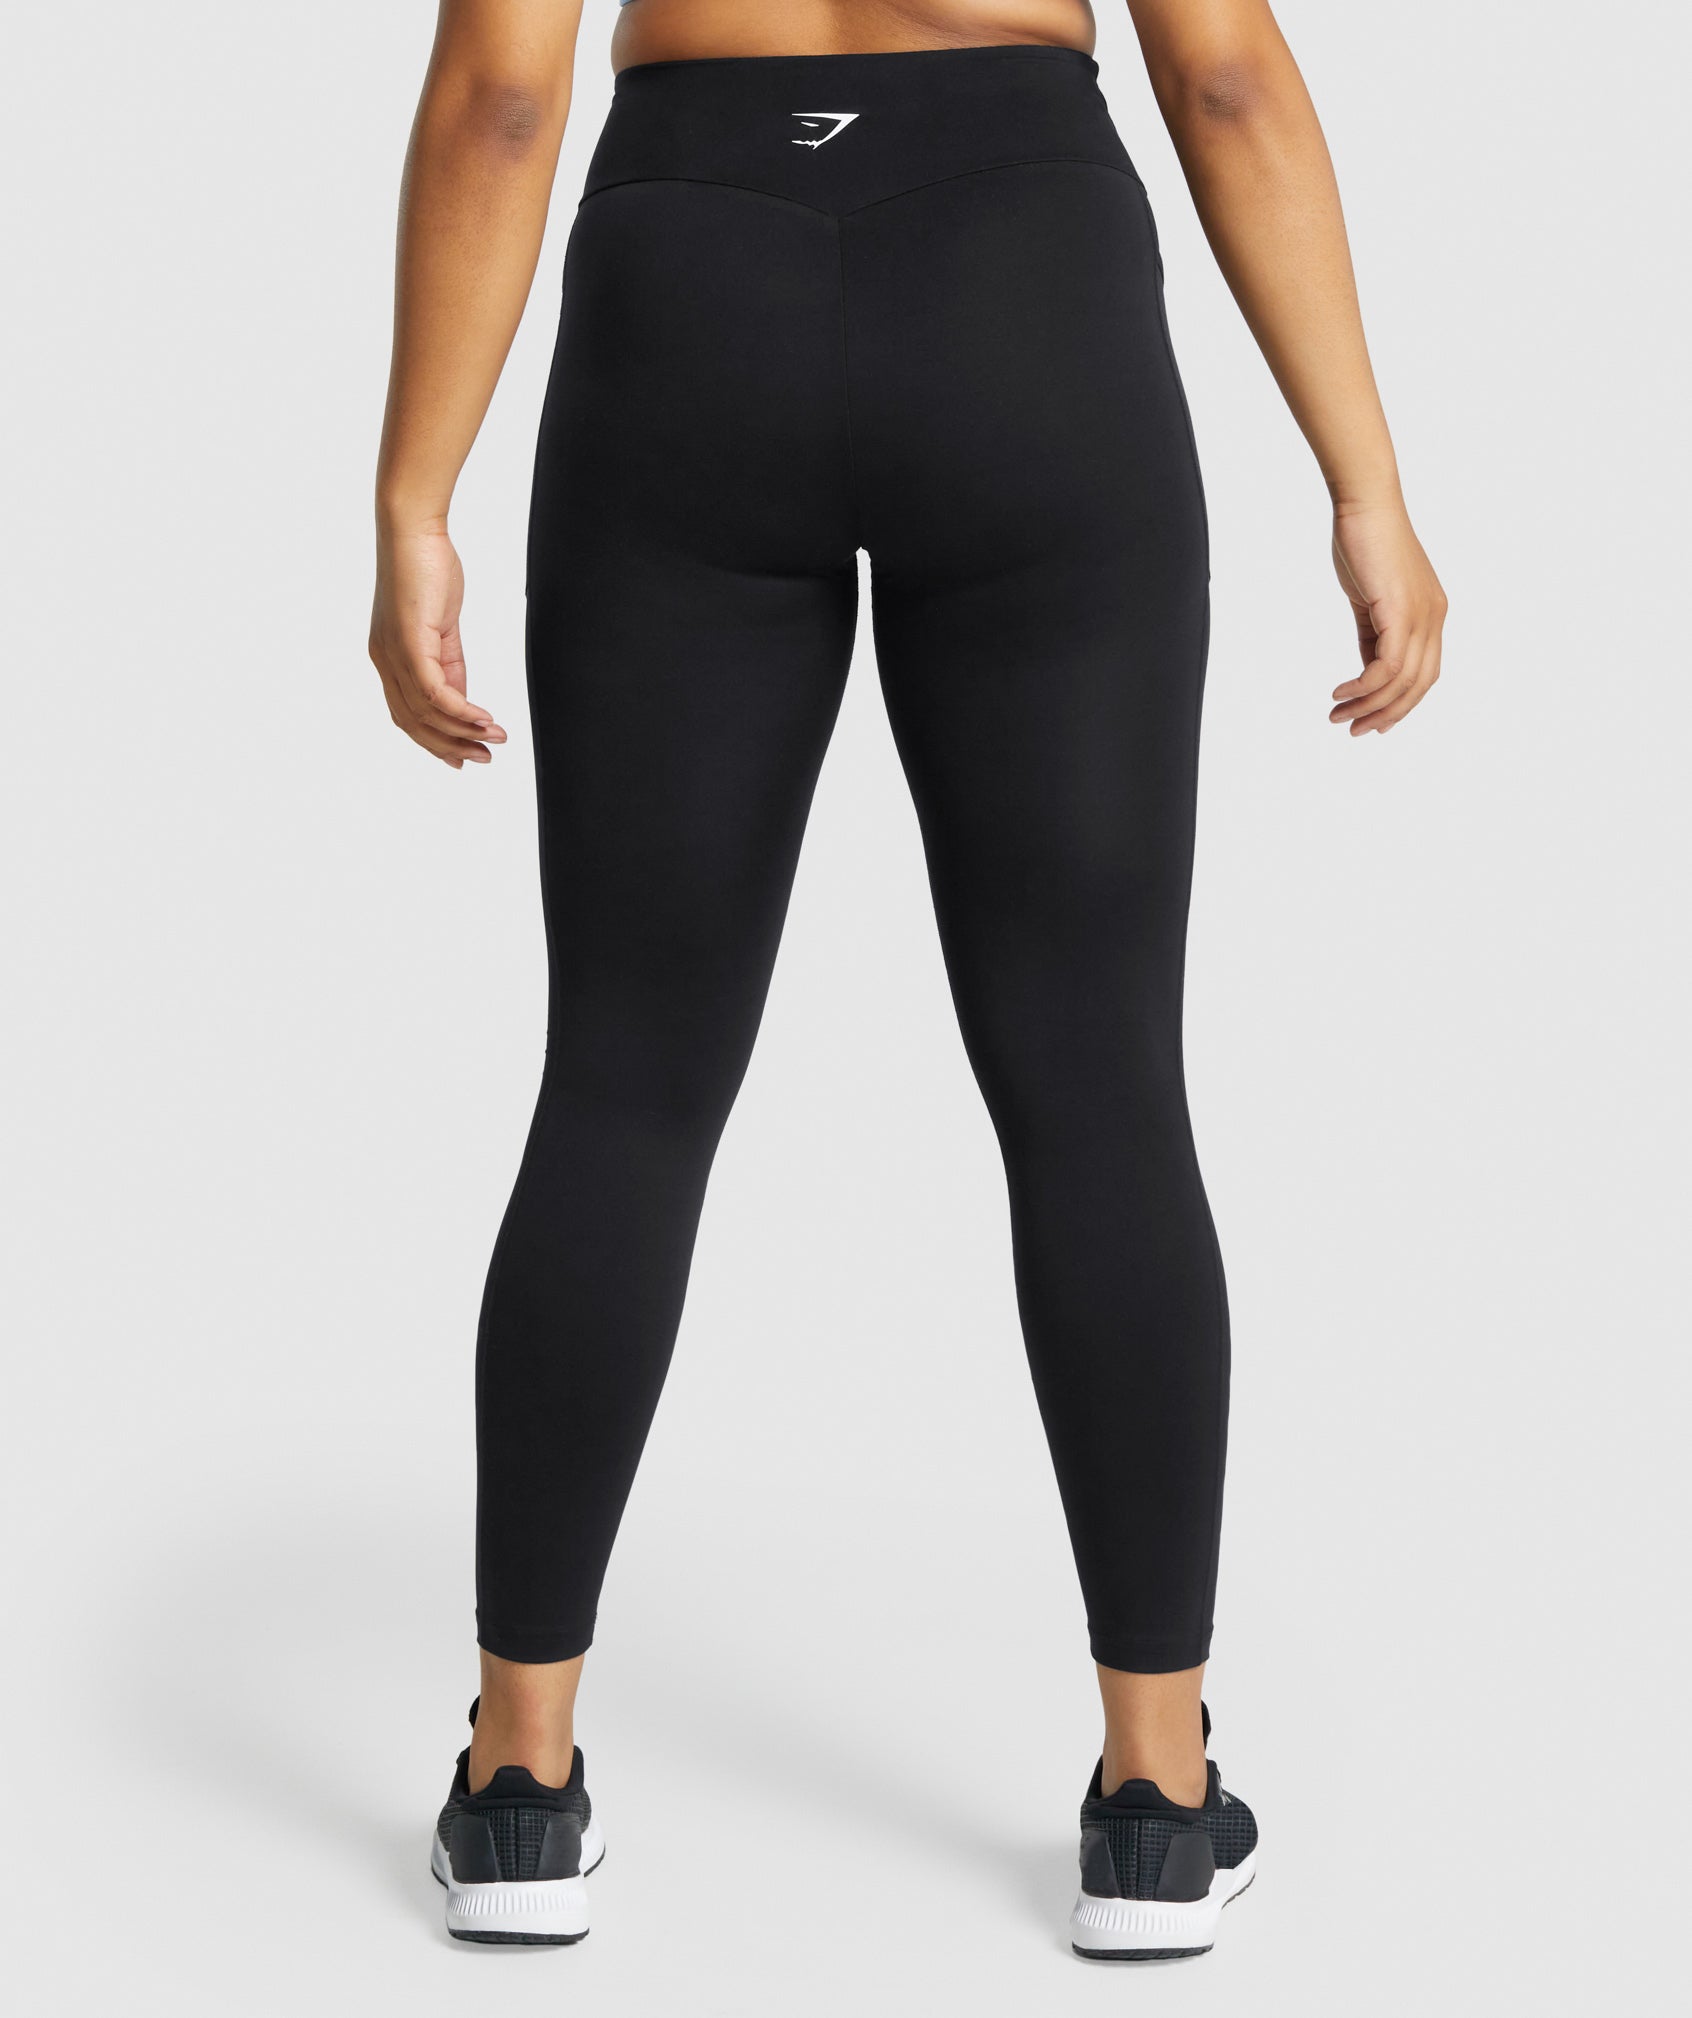 Gymshark Leggings Black Size XL - $40 (38% Off Retail) - From Emma